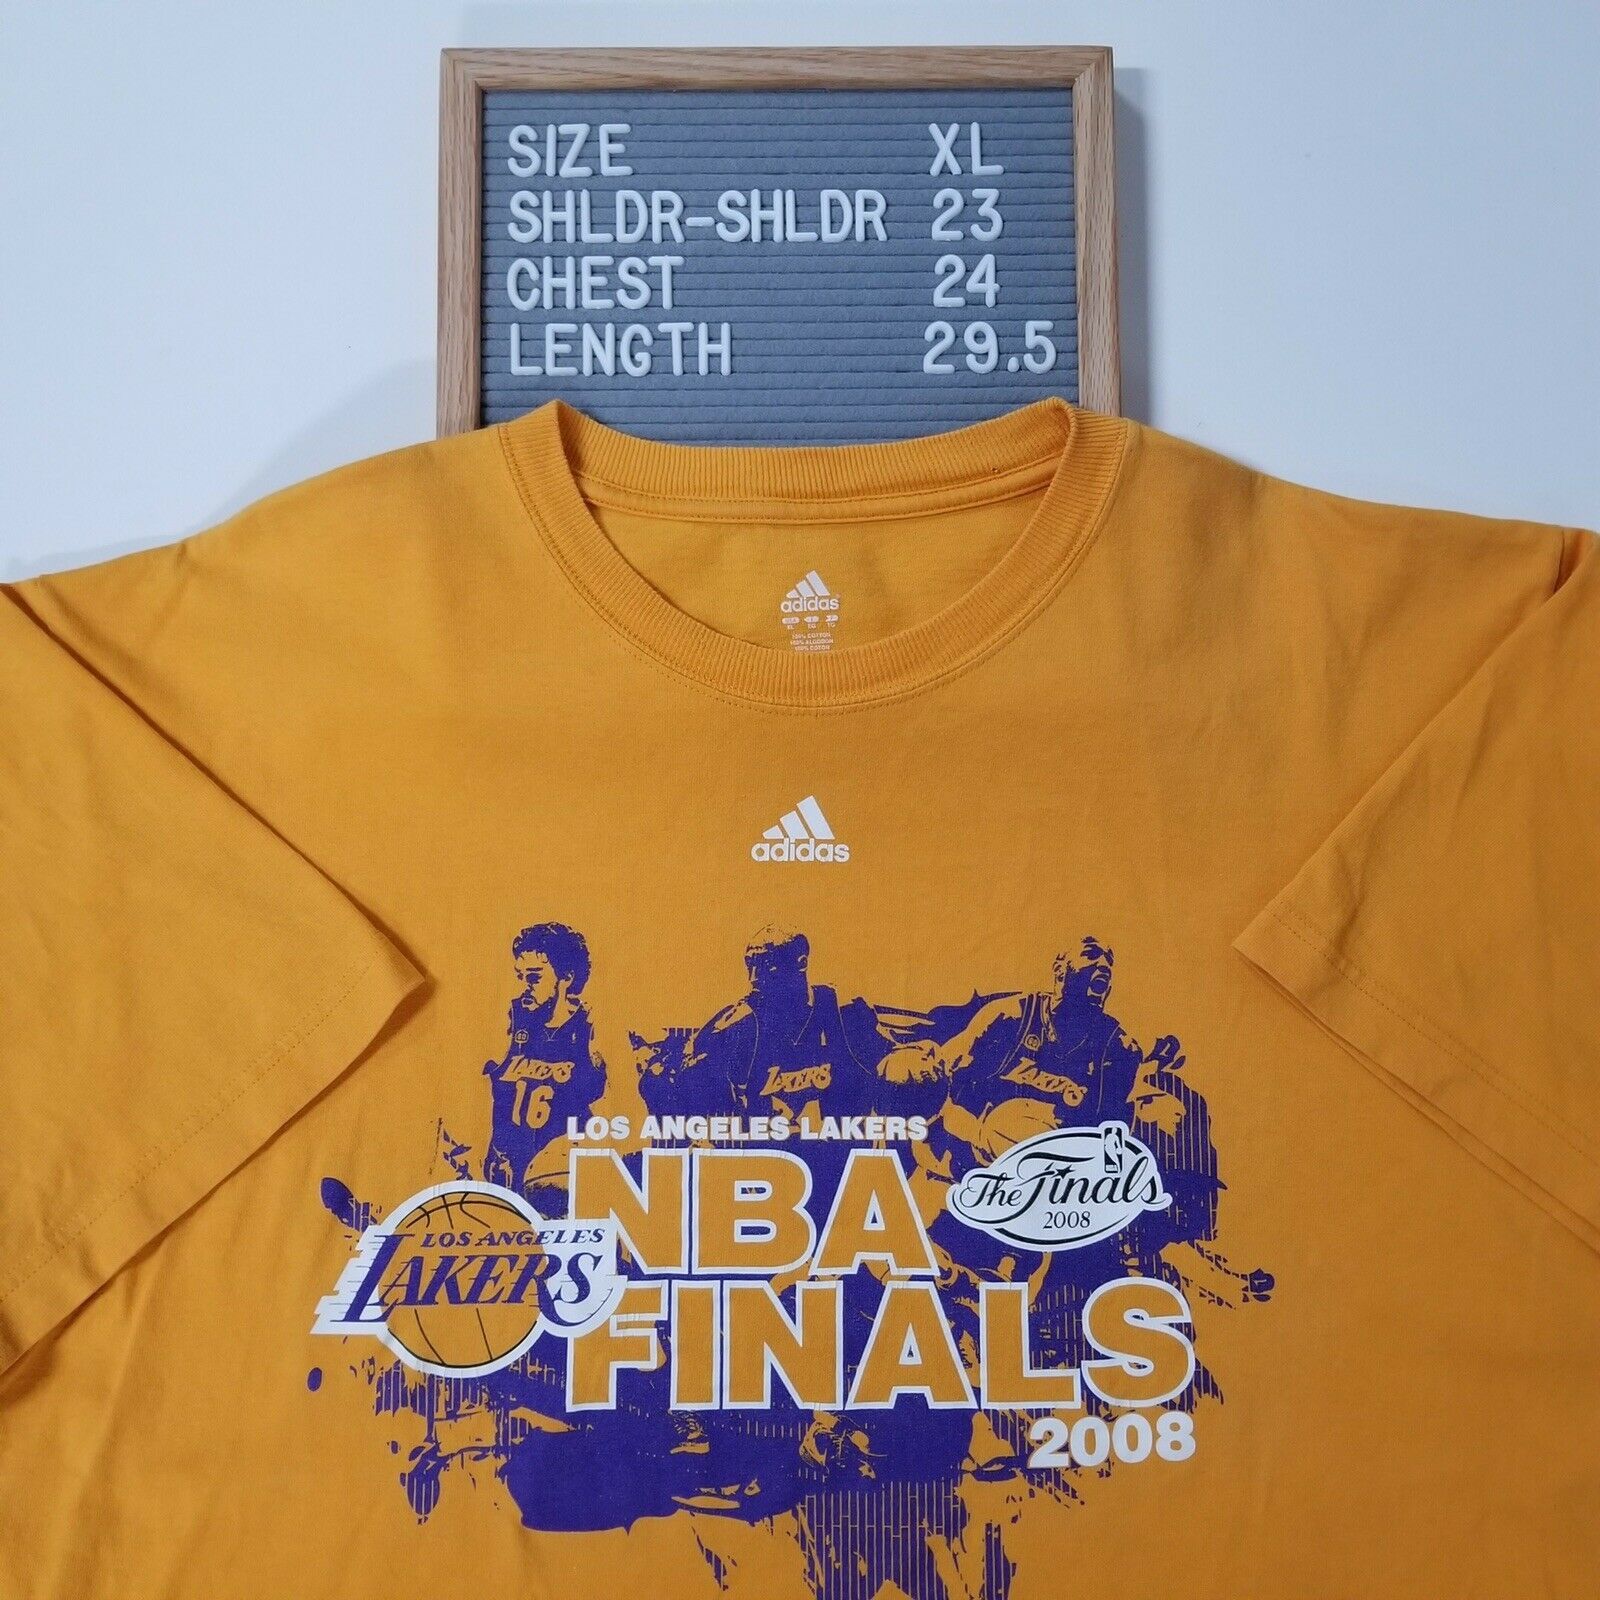 Adidas ADIDAS T-Shirt XL KOBE BRYANT #24 NBA Finals Size US XL / EU 56 / 4 - 2 Preview